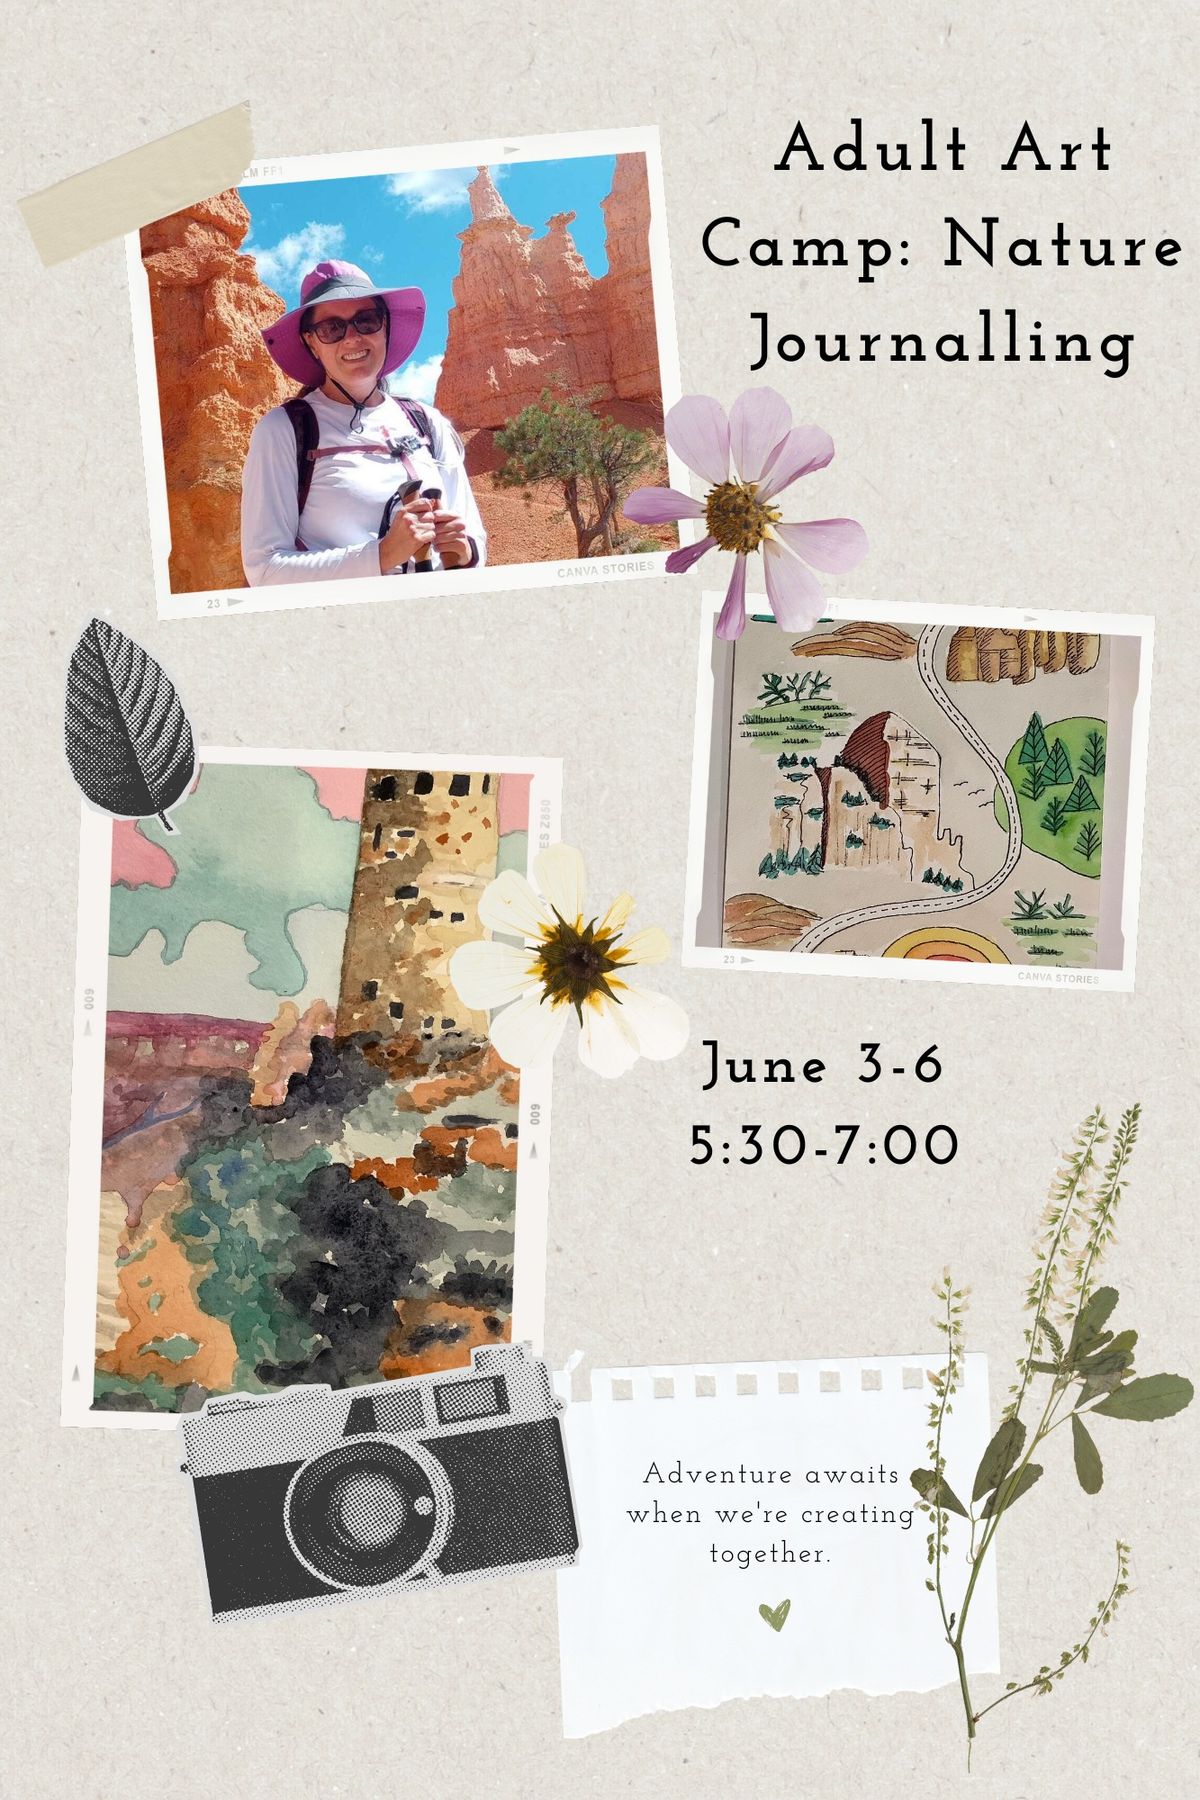 Adult Art Camp: Nature Journaling